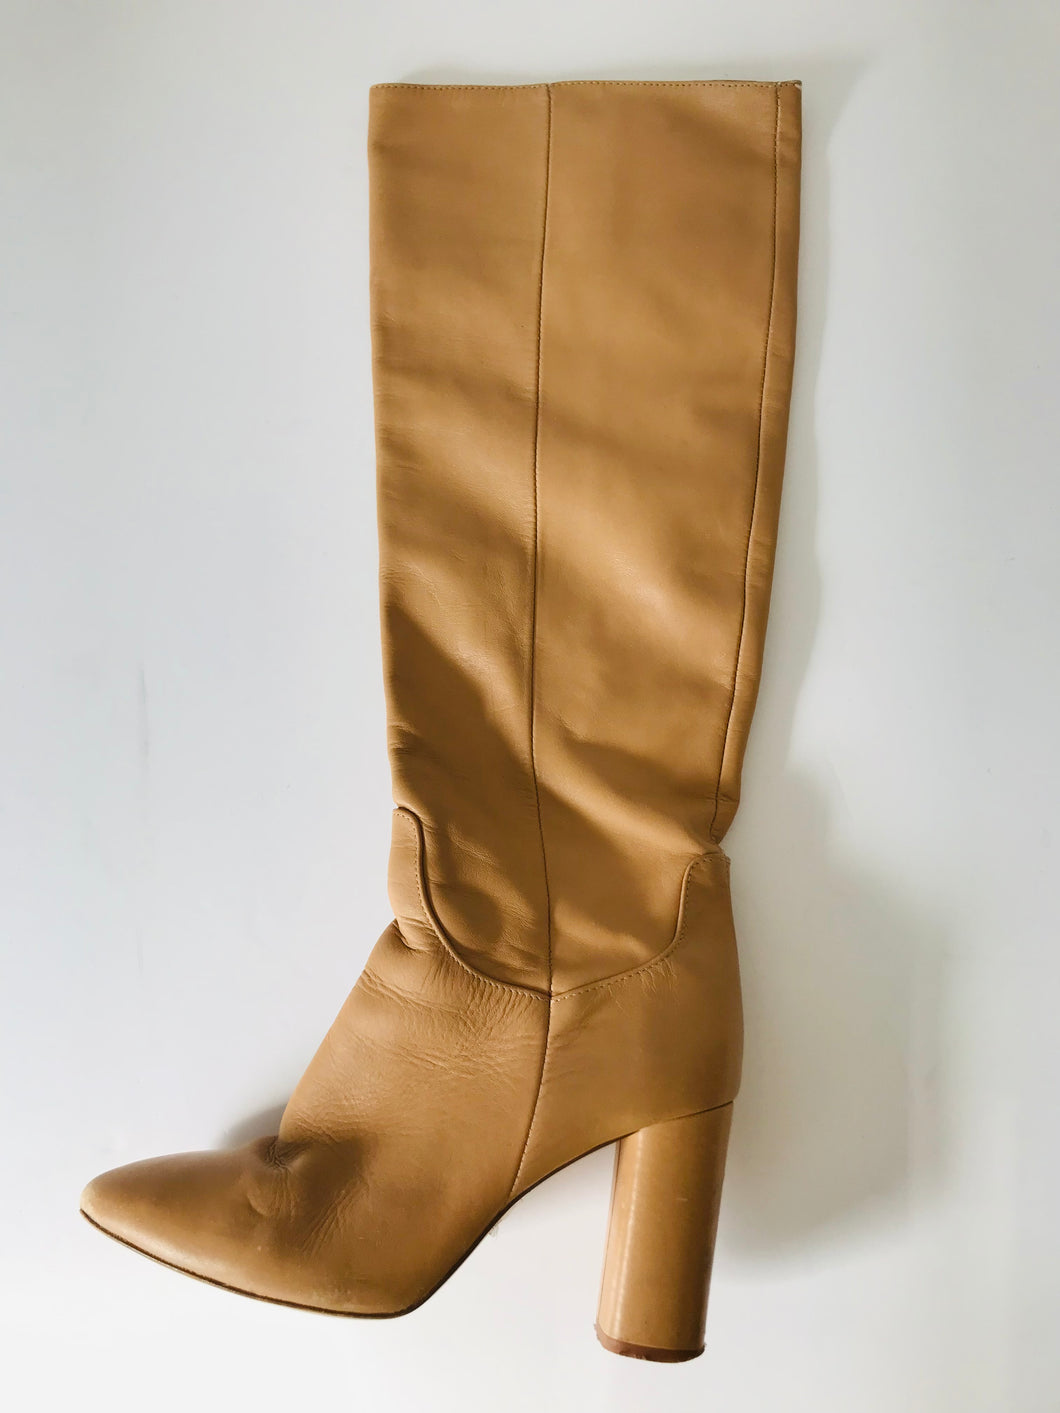 Zara Women's Knee High Heeled Boots | UK4 EU37 | Beige